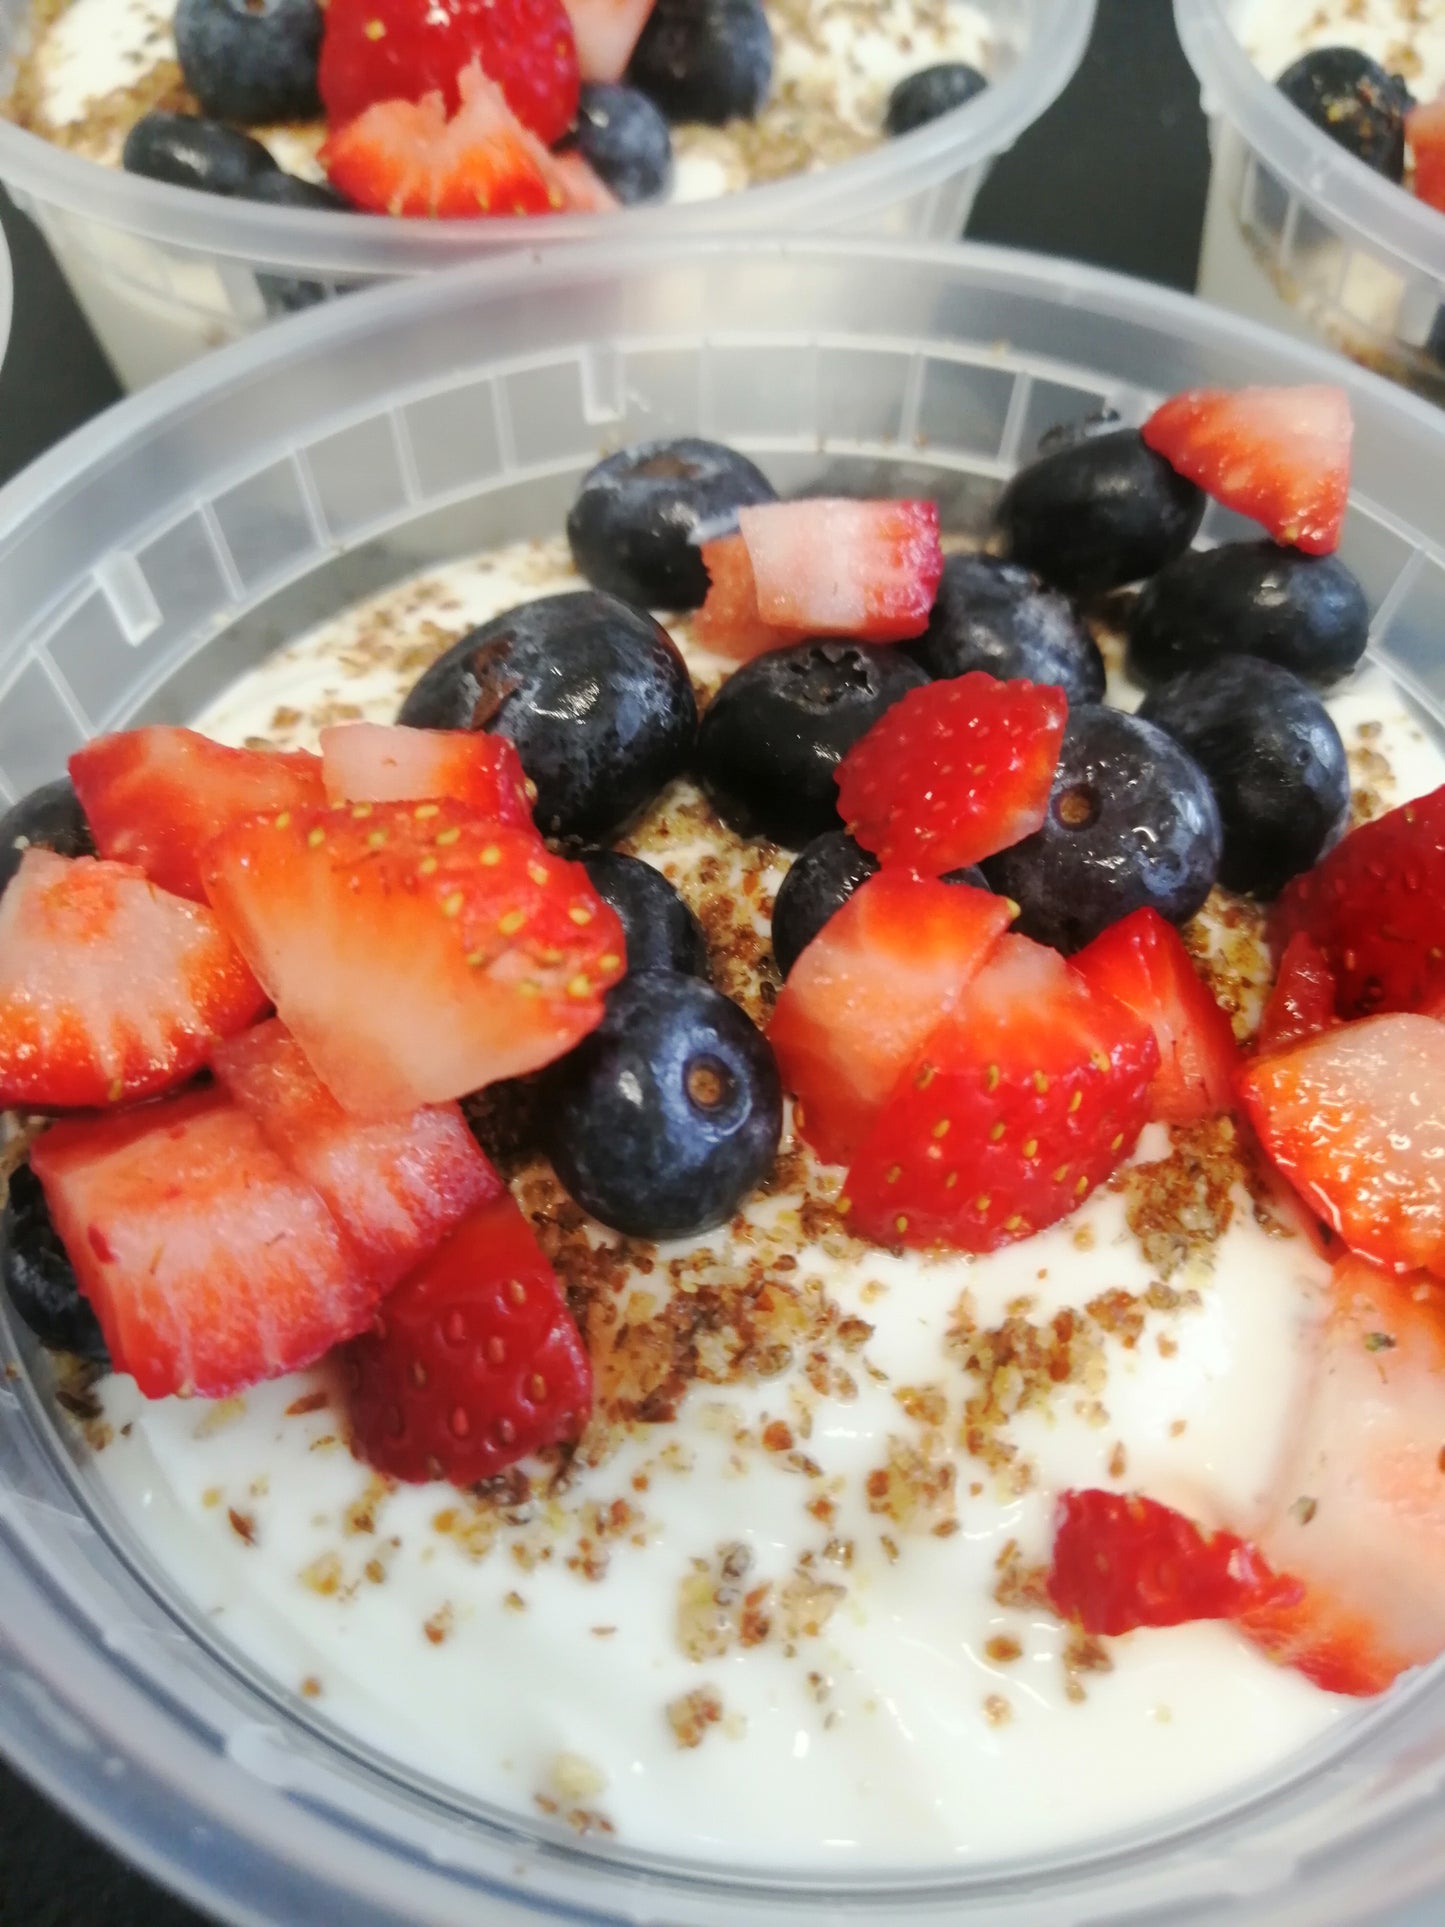 Oatmeal or Yogurt Bowl - Breakfast